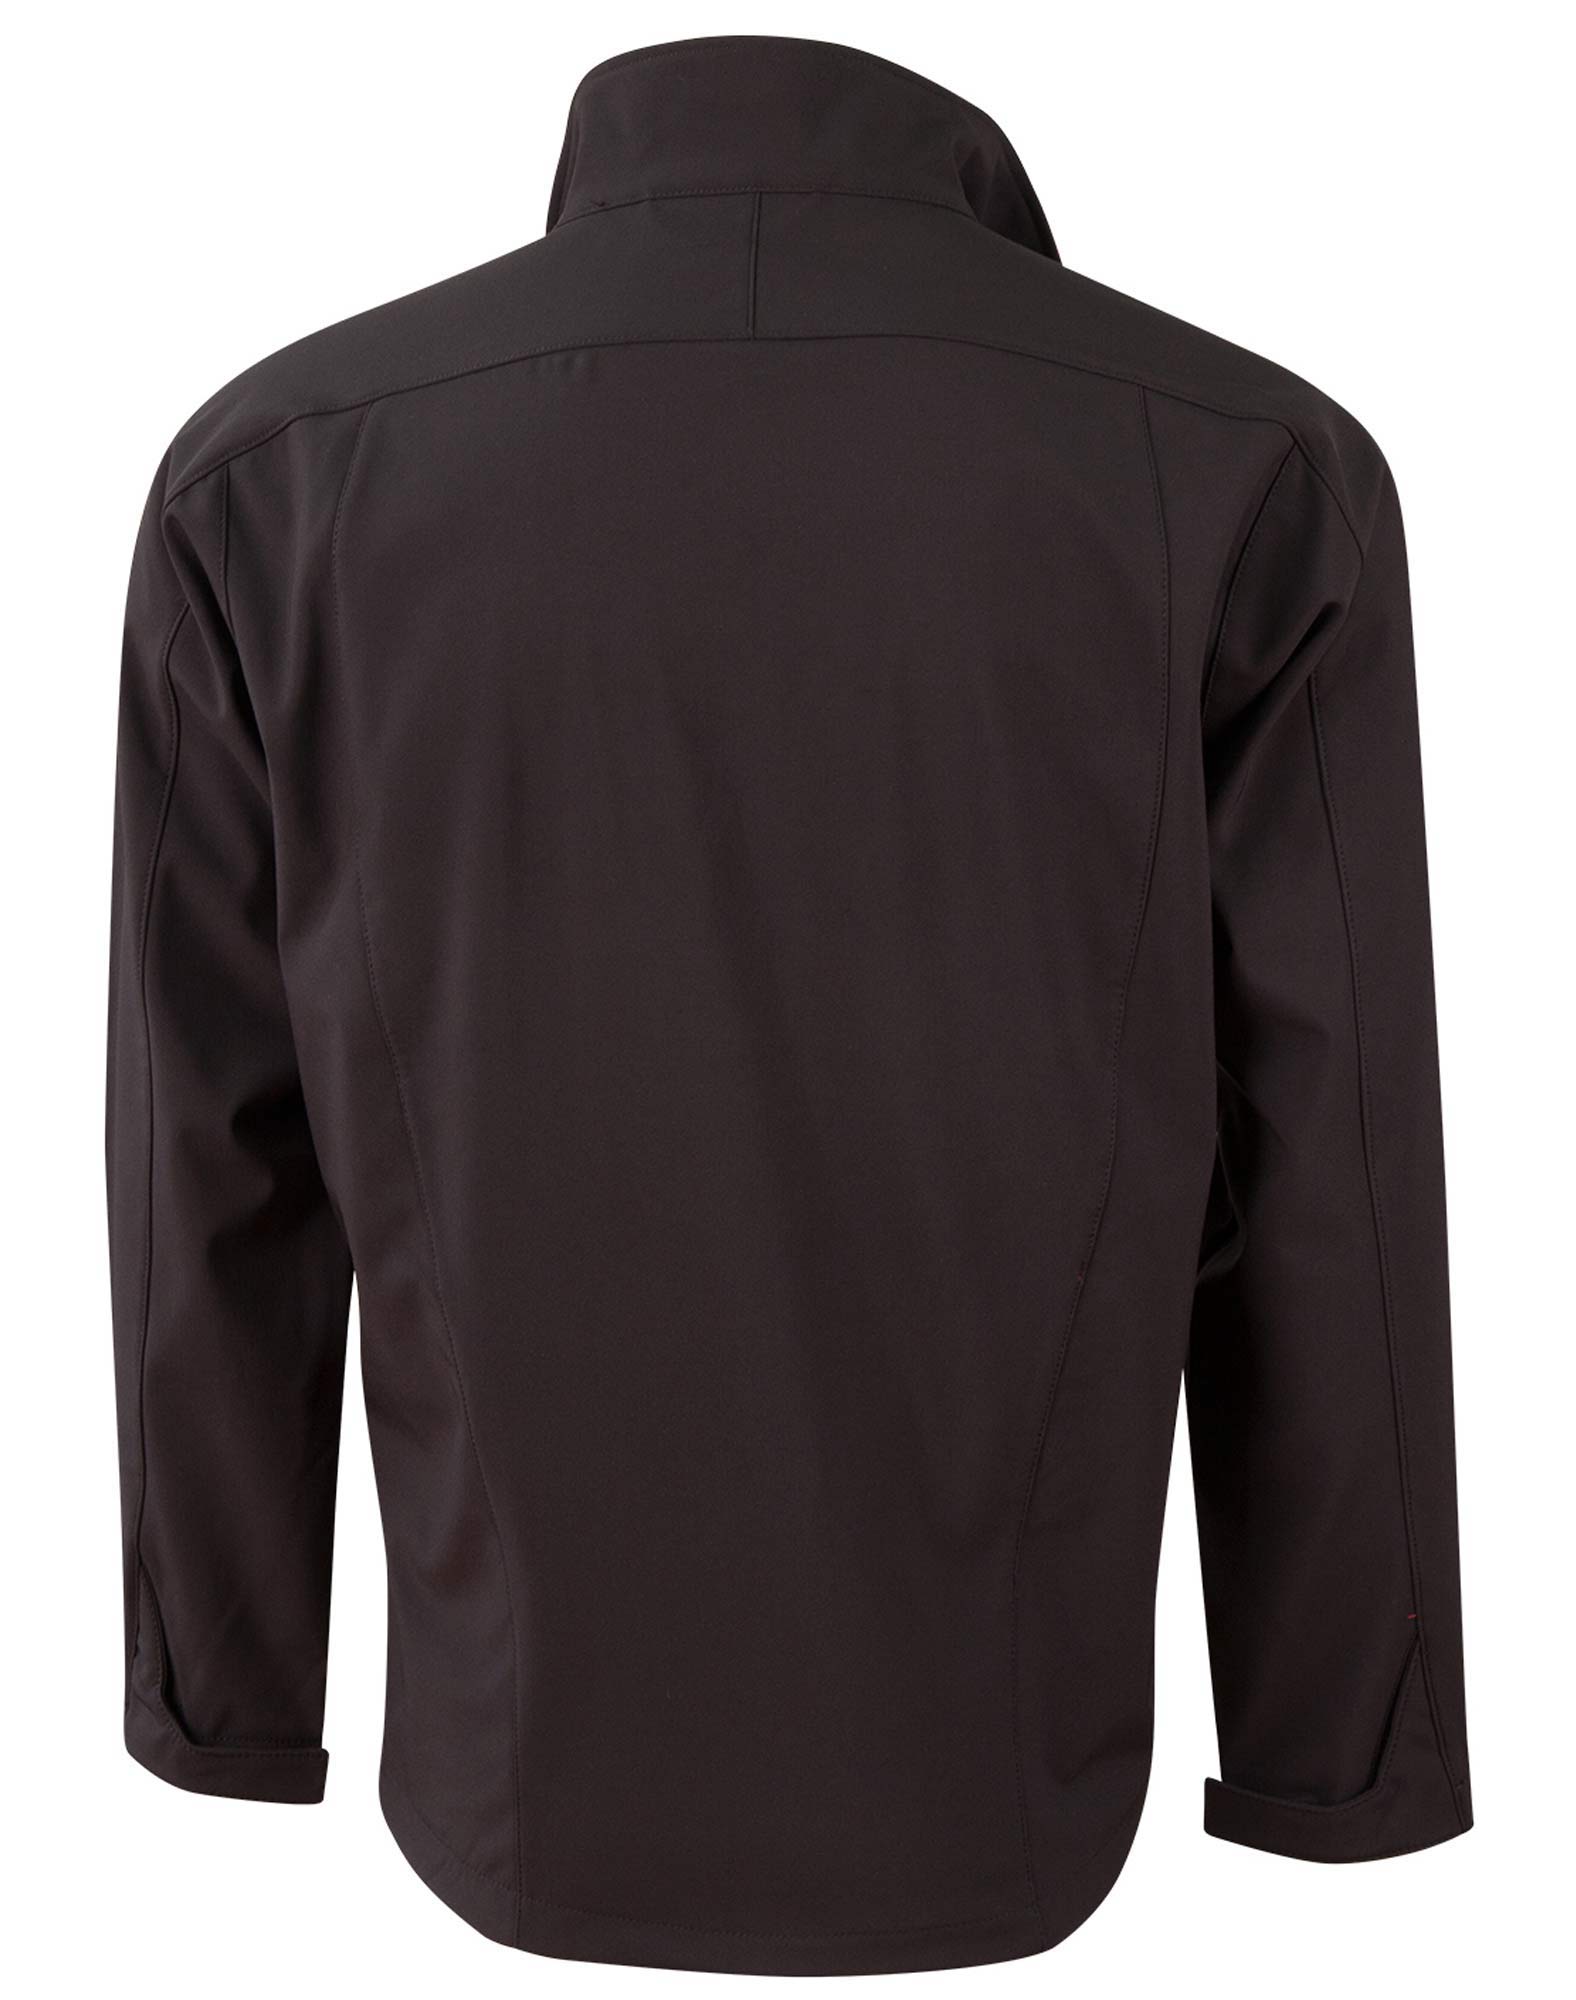 [JK15] Men's Softshell Contrast Jacket